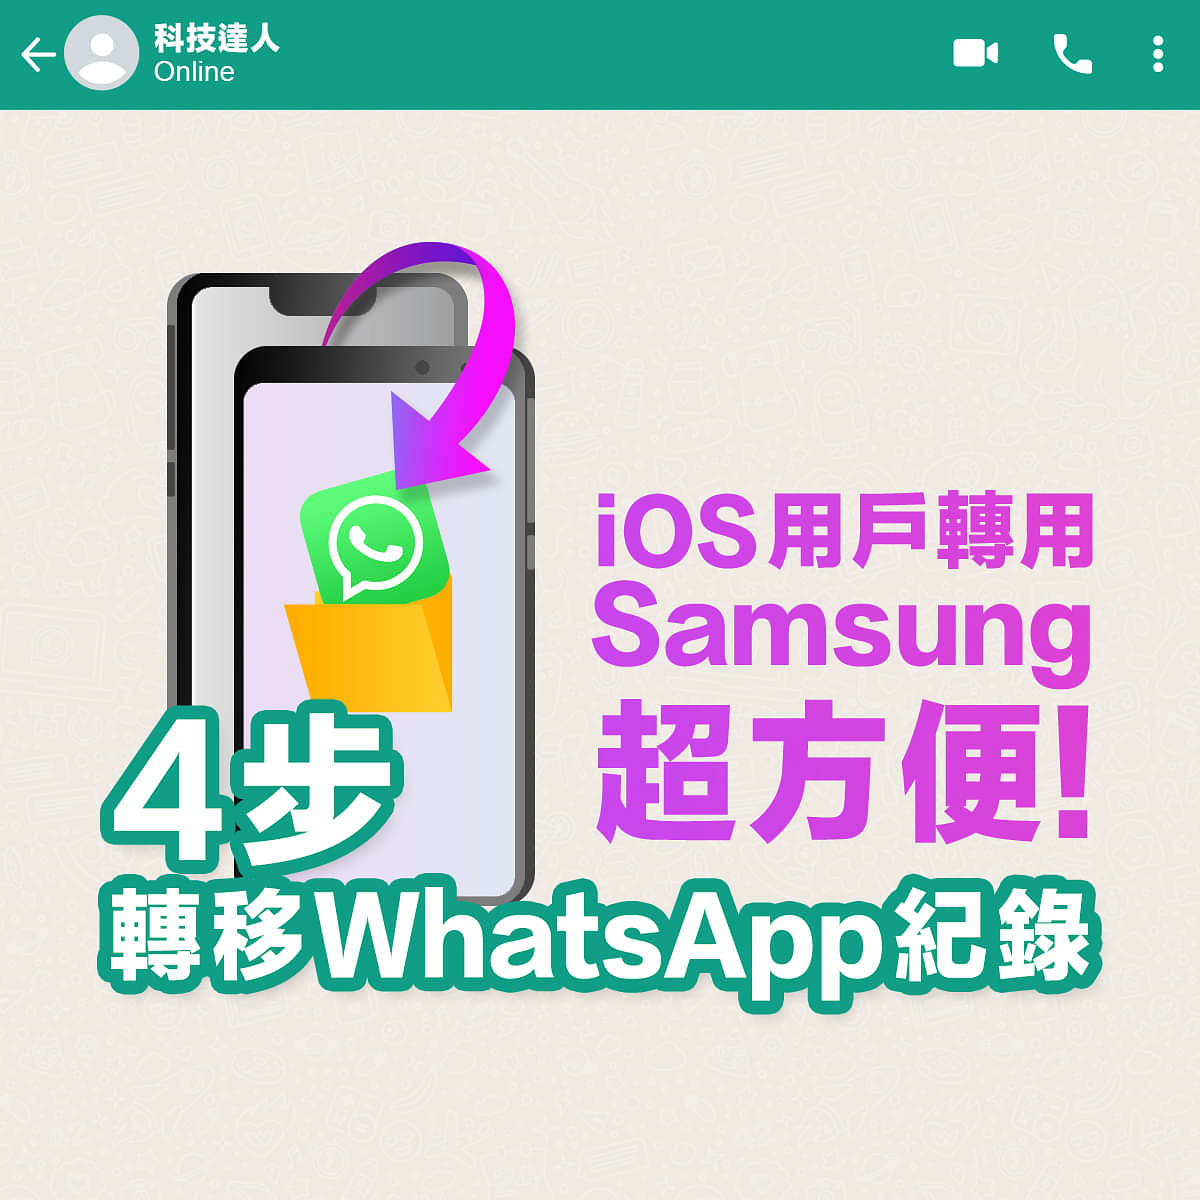 【iOS用戶轉用Samsung超方便 4⃣步轉移WhatsApp紀錄】
iOS用家轉用Samsung Galaxy手機可以用新手機預載《Smart Switch》App輕易將資料轉移，就連以往不能轉移WhatsApp 通話紀錄